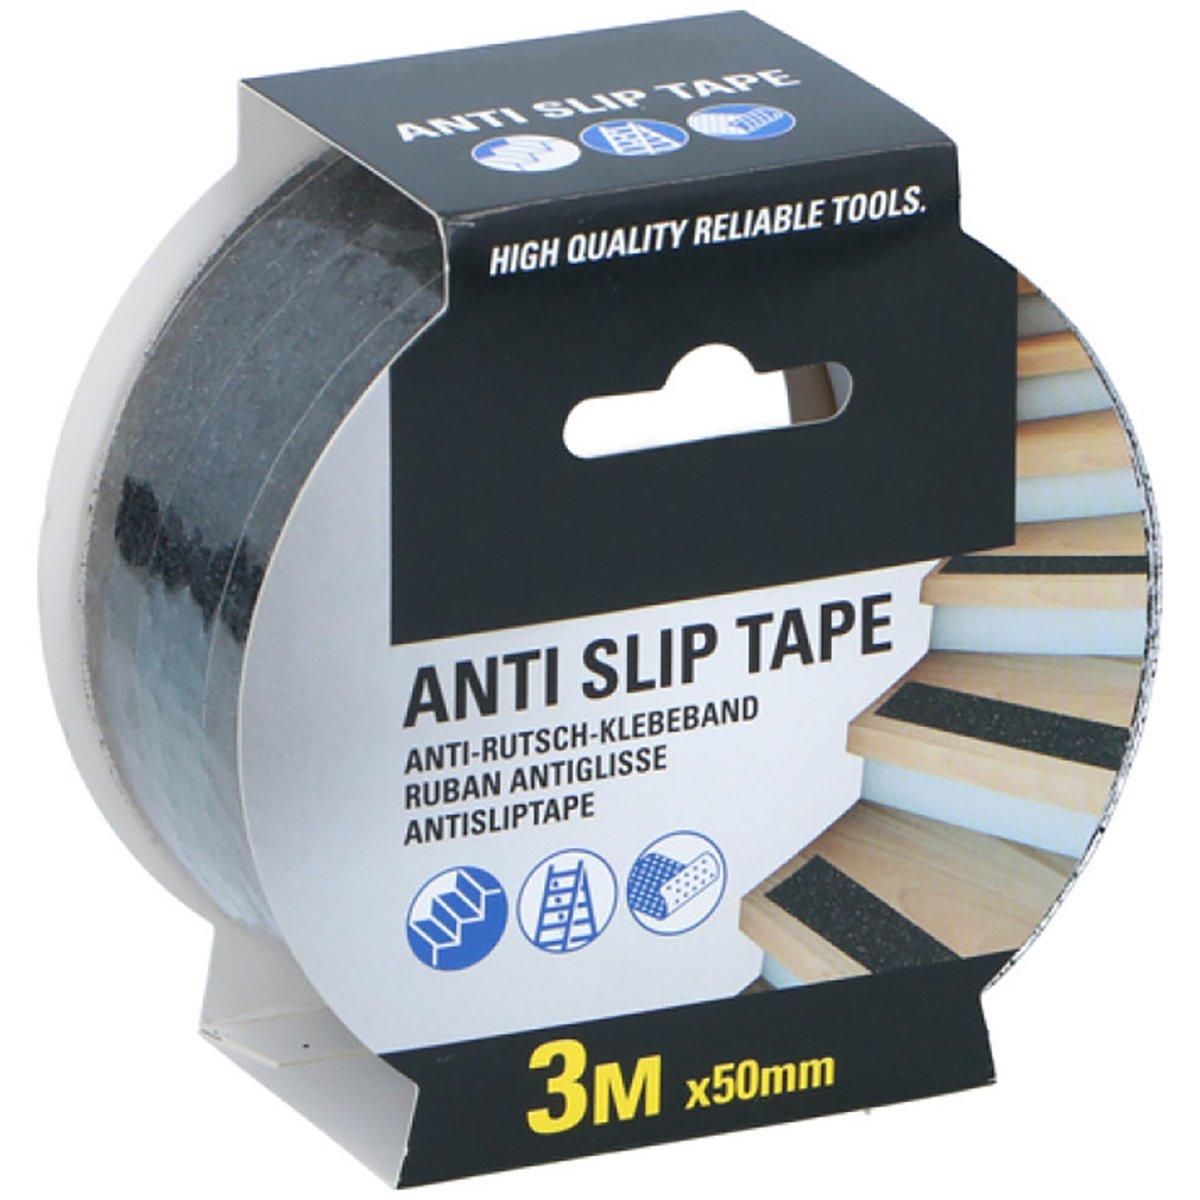 Buy Anti-Slip/ Anti-Skid Tape Get Up To 60% OFF – Robustt